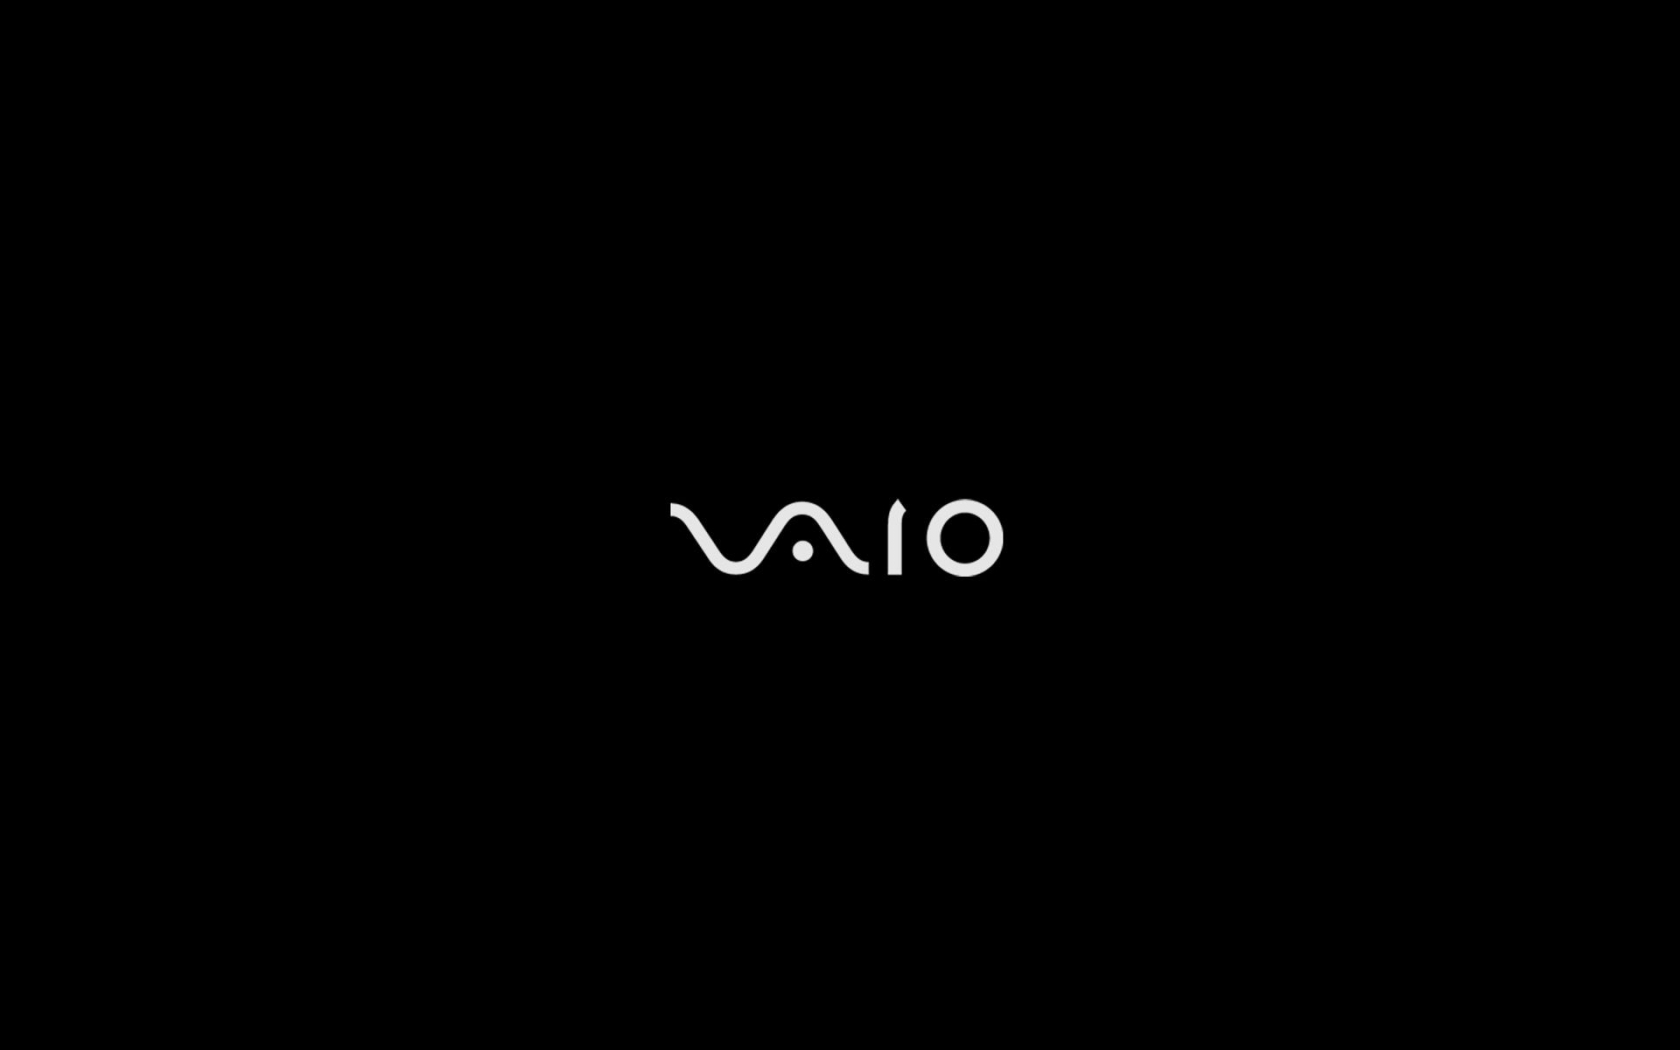 Vaio Black for 1680 x 1050 widescreen resolution